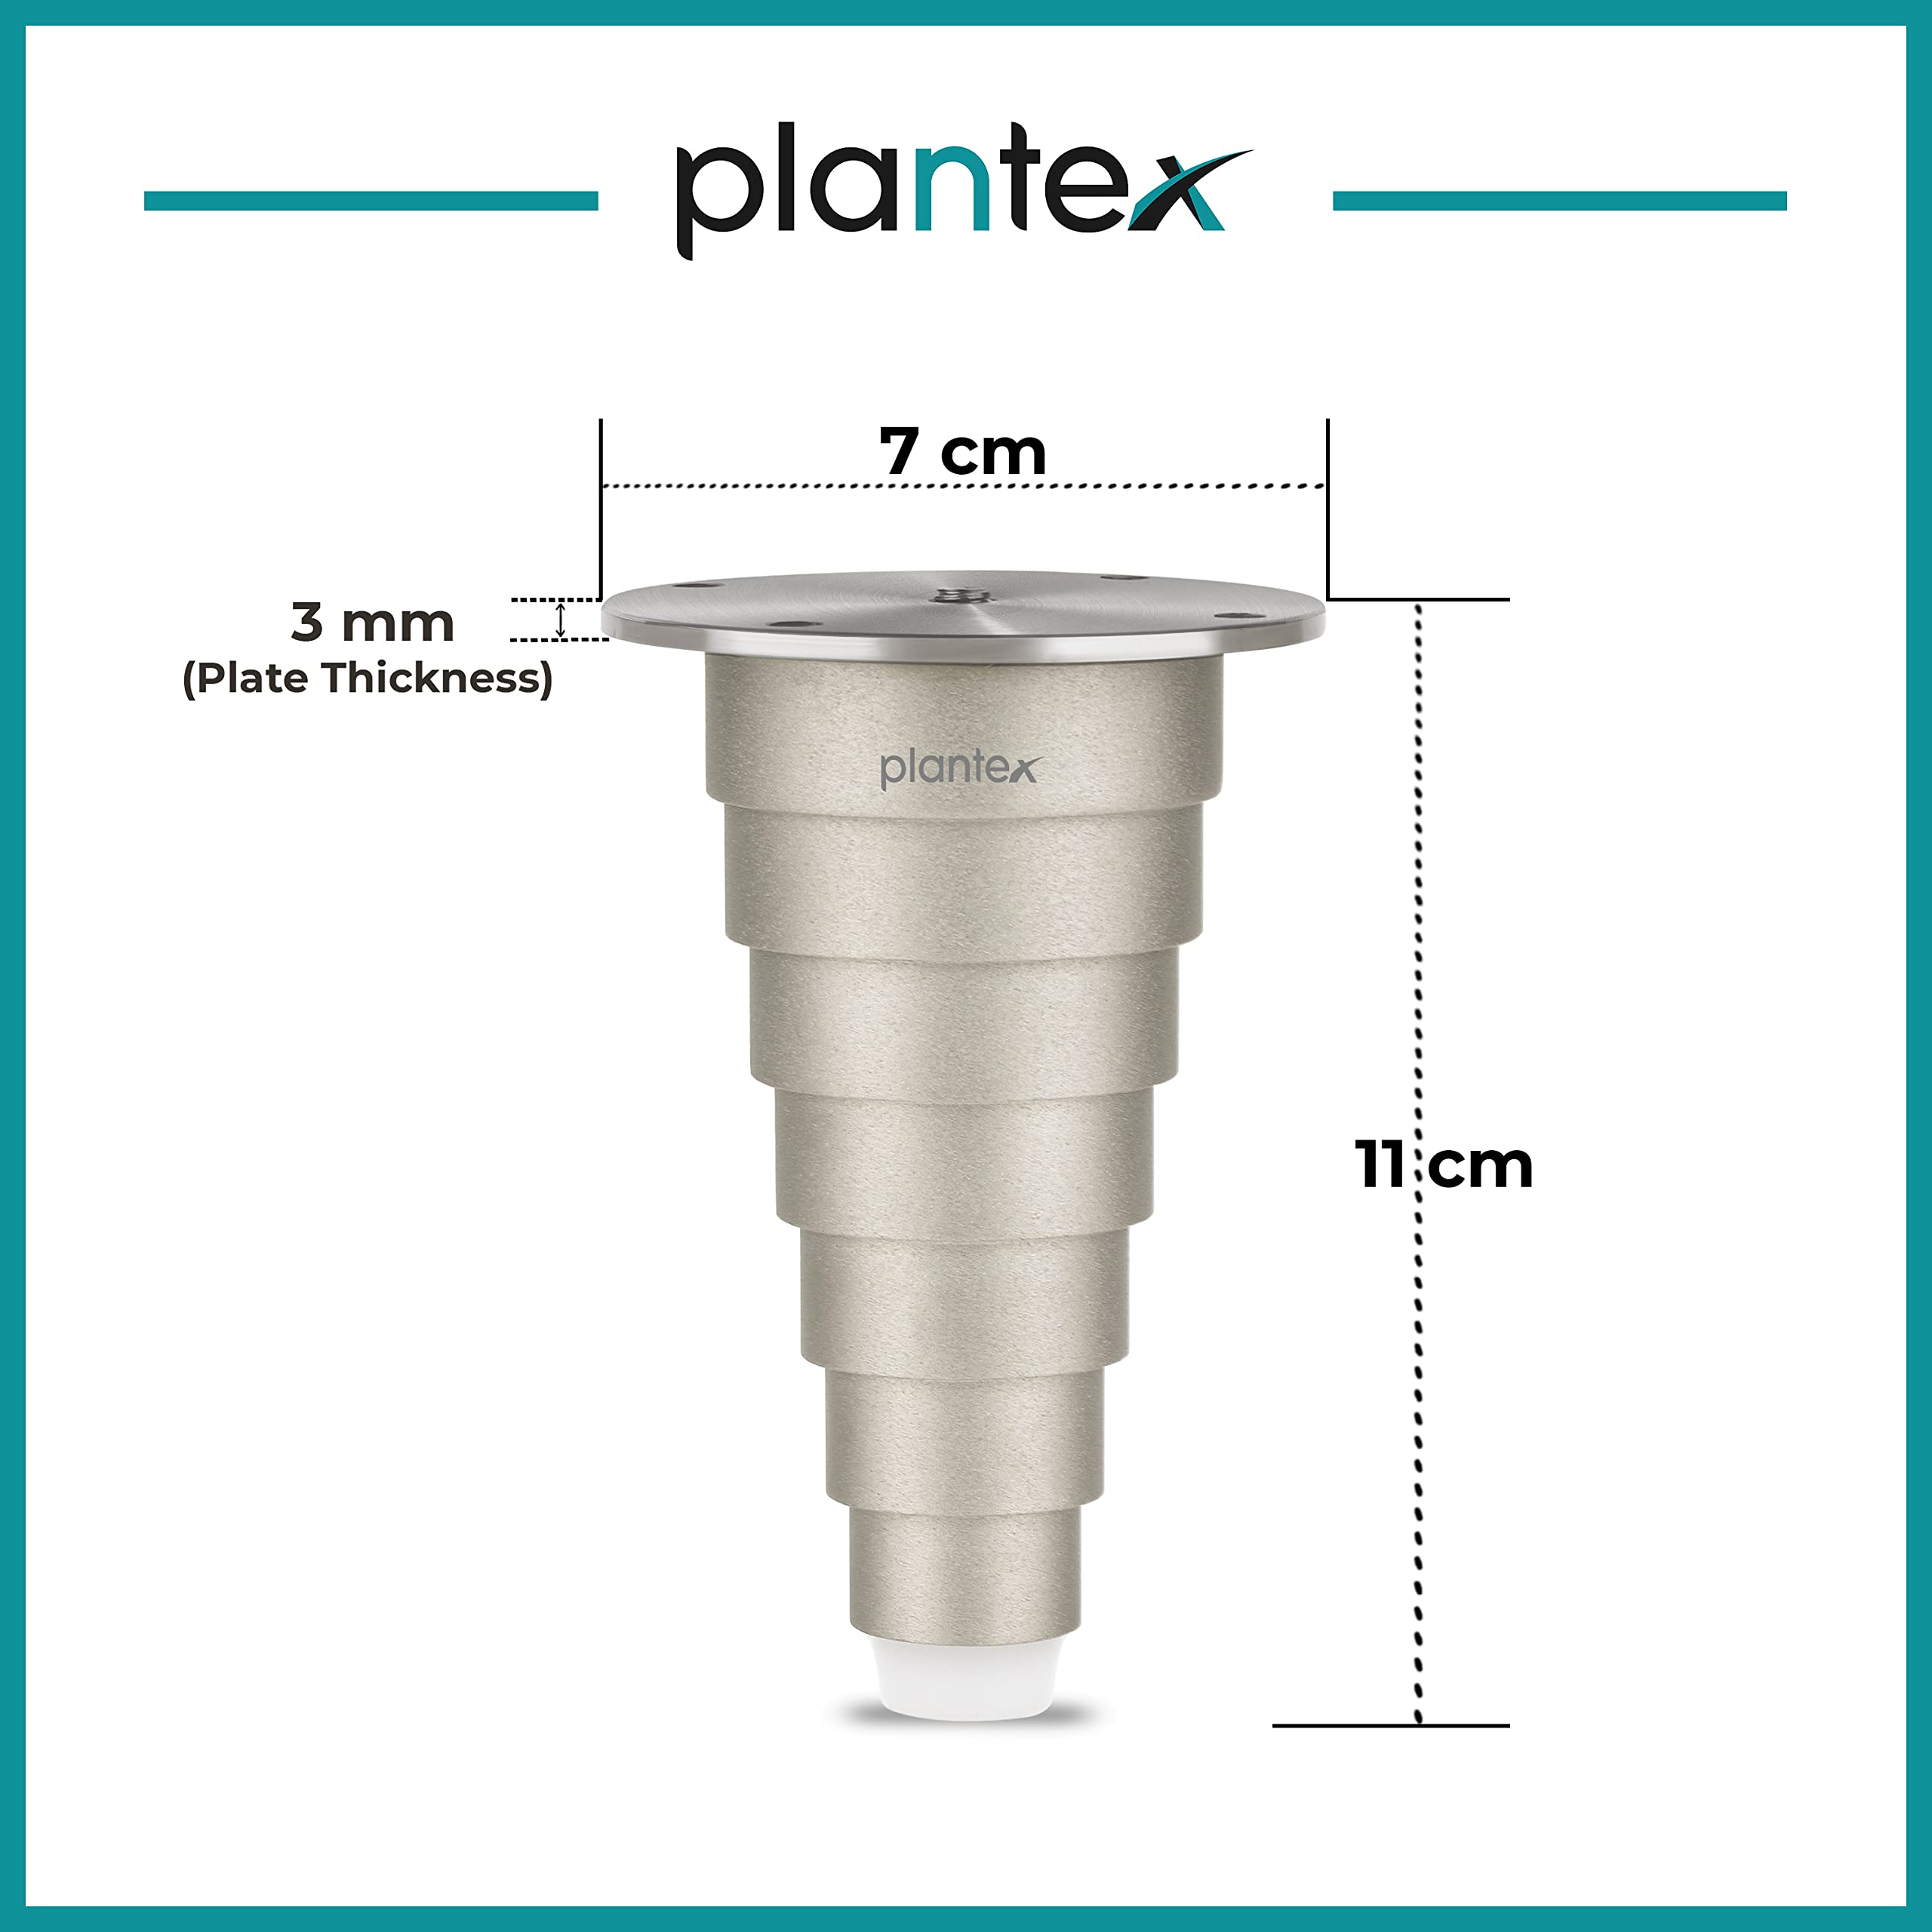 Plantex Aluminum 4 inch Sofa Leg/Bed Furniture Leg Pair for Home Furnitures (DTS-66-Chrome) – 8 Pcs